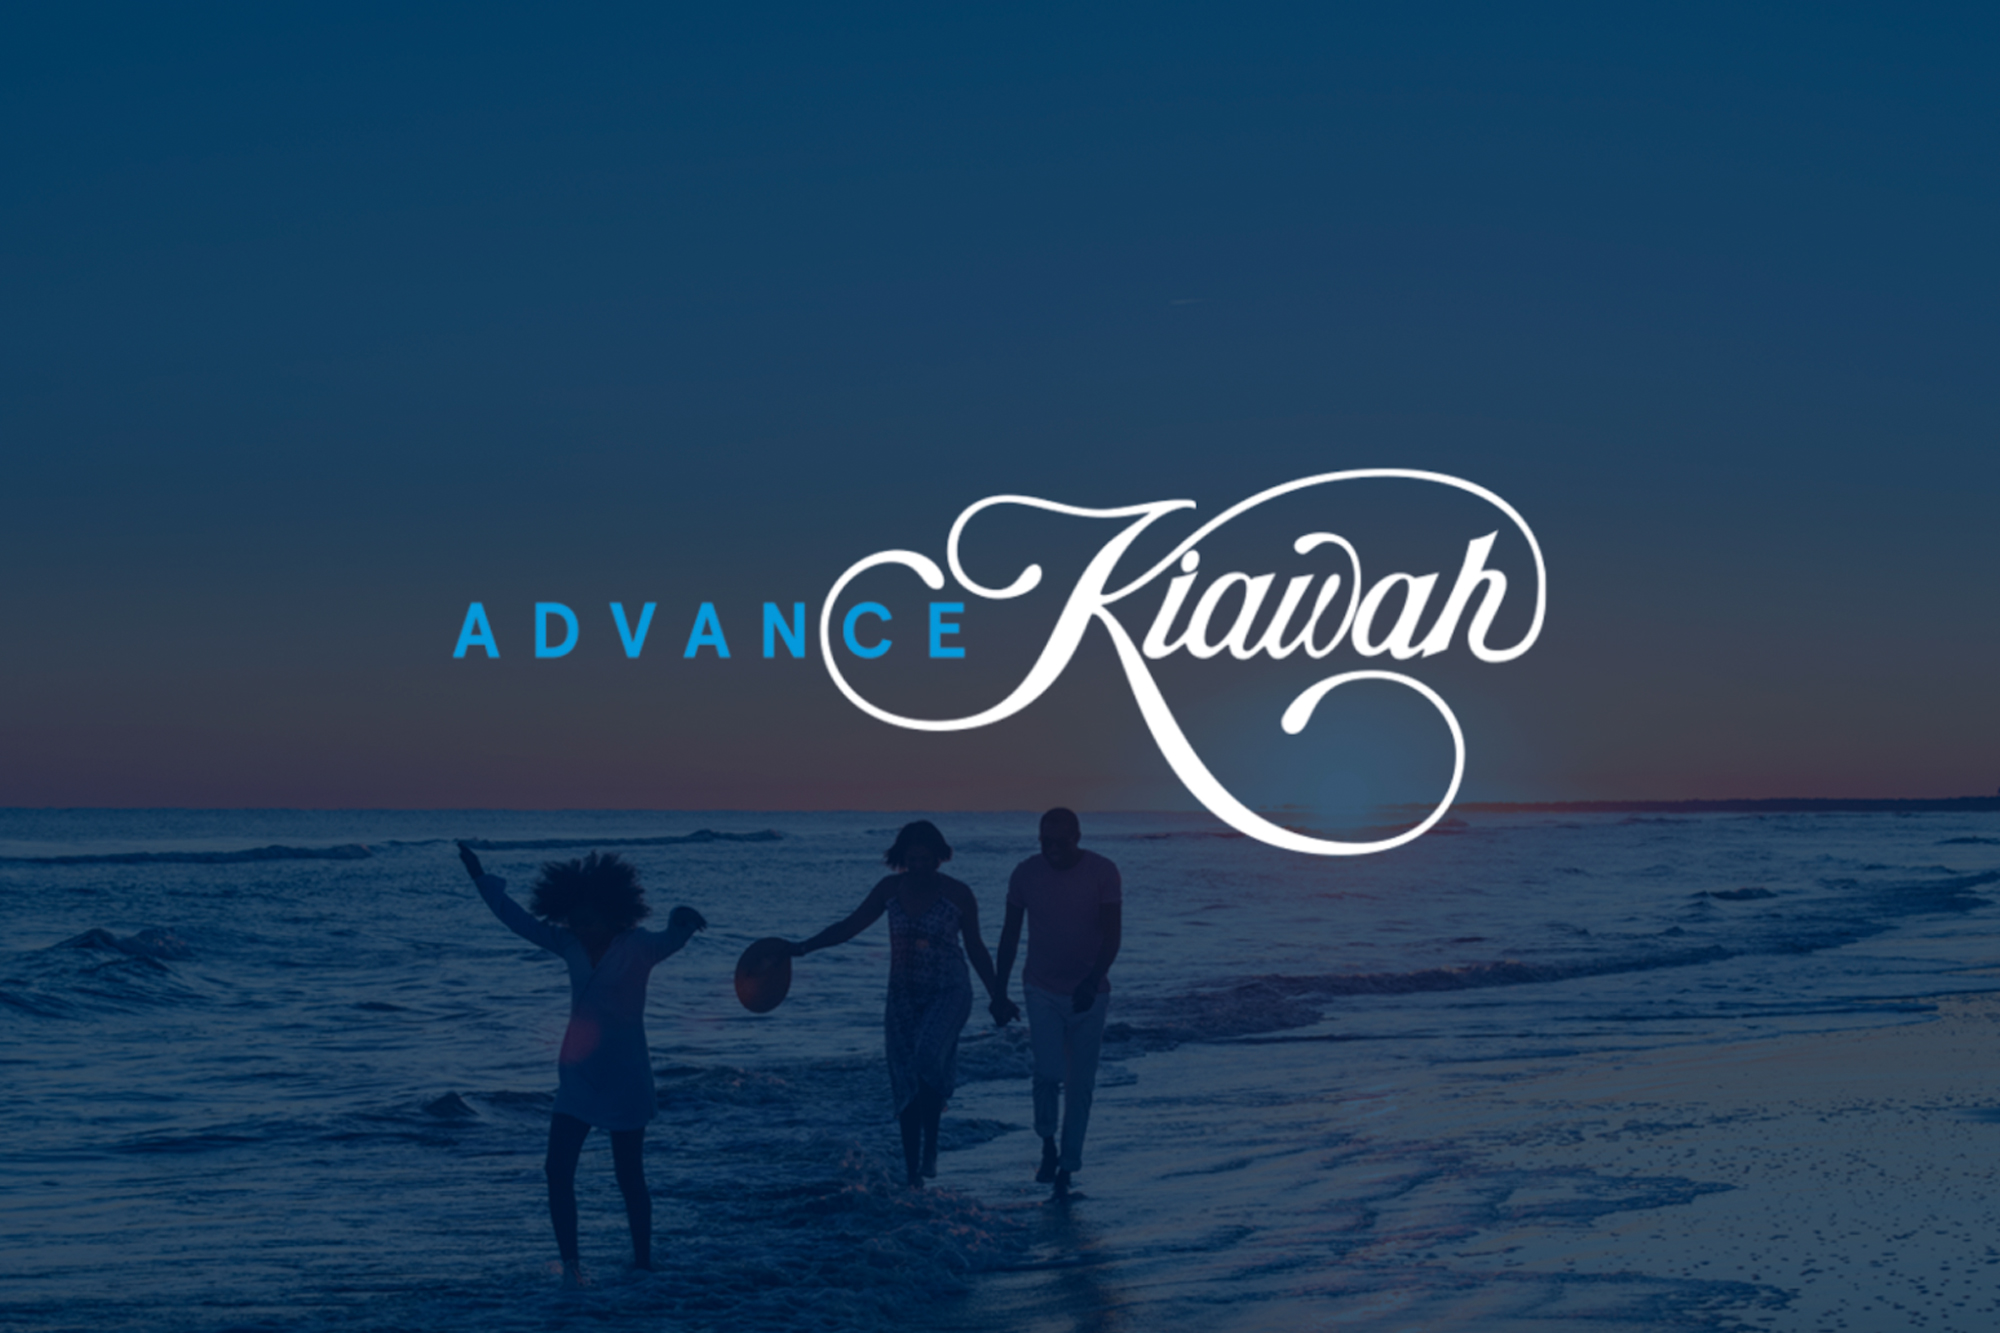 PRESS RELEASE: South Street Partners Announces Advance Kiawah